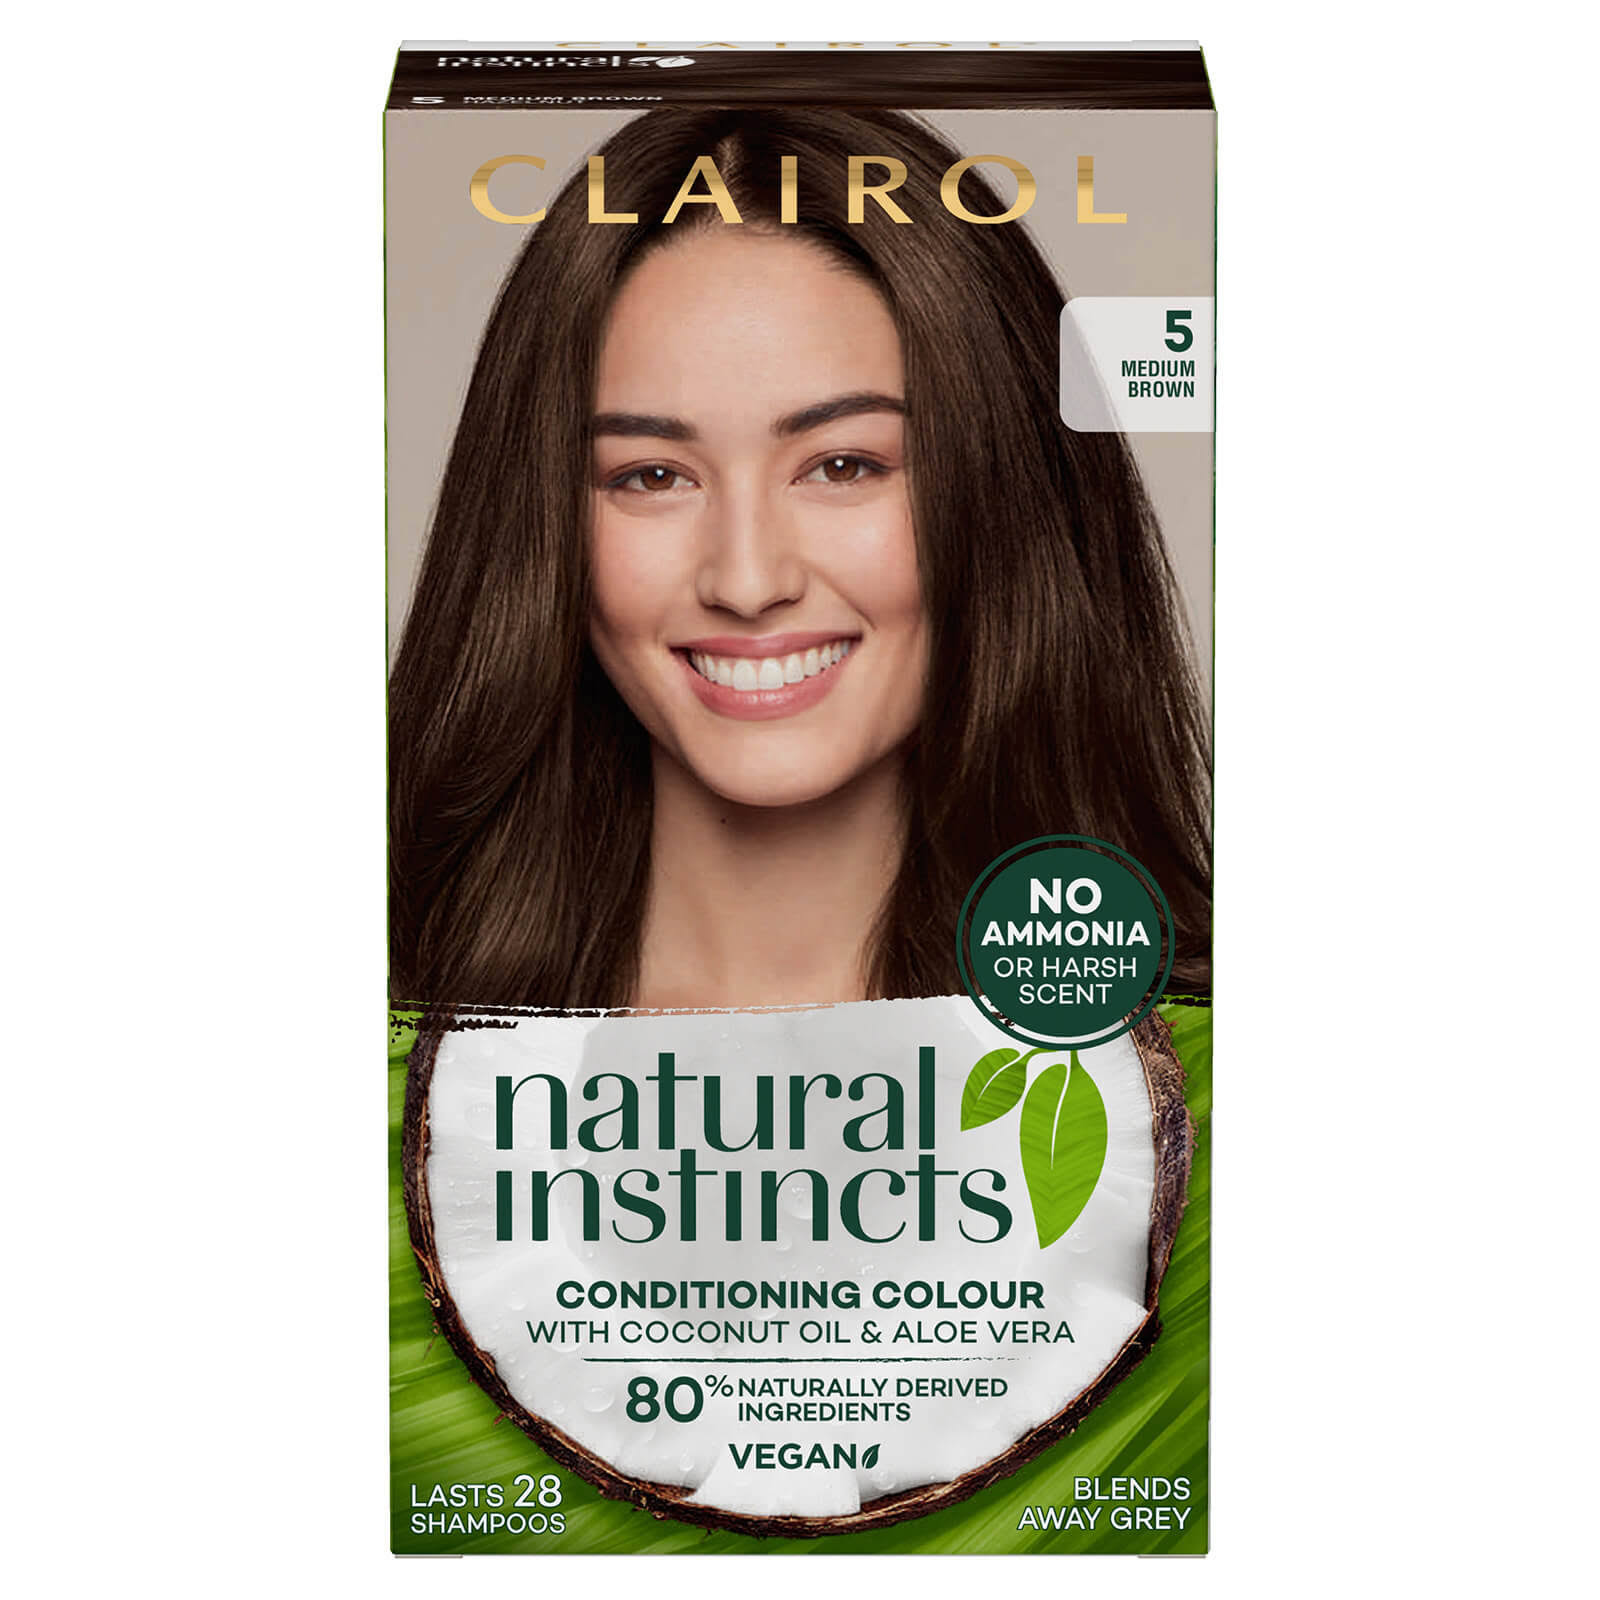 Clairol Natural Instincts Semi-Permanent No Ammonia Vegan Hair Dye 177ml (Various Shades) - 5 Medium Brown